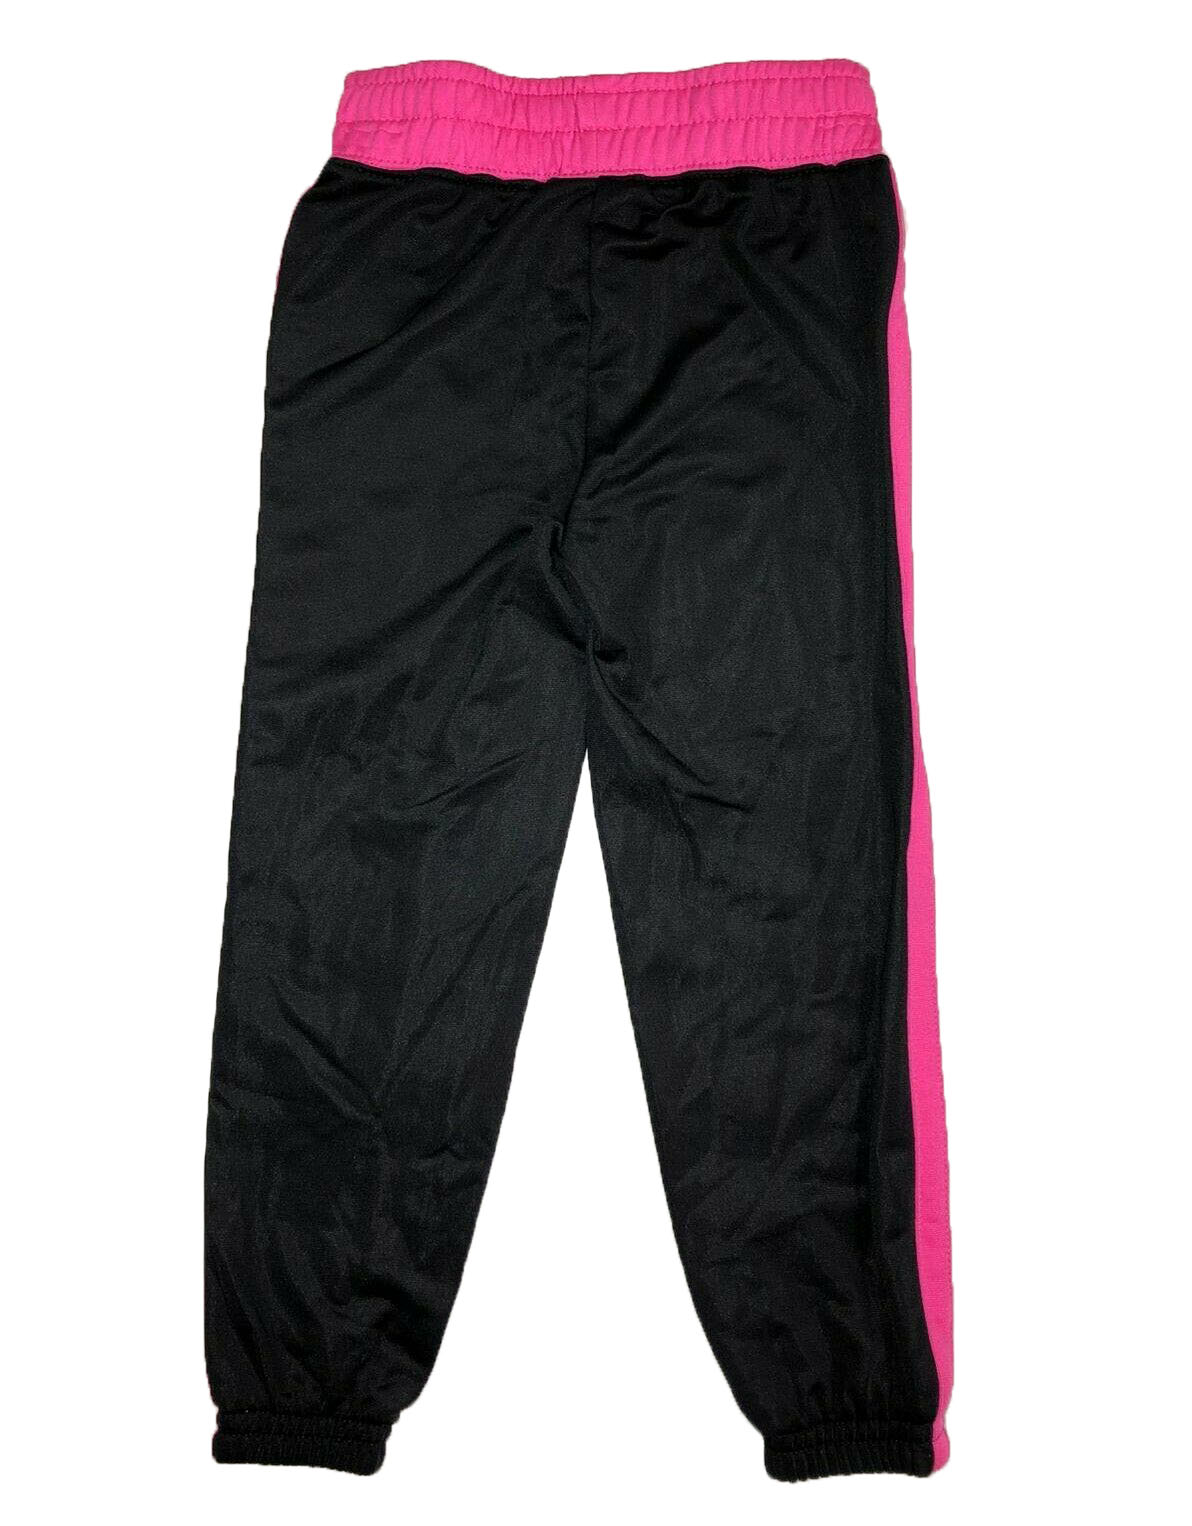 Nike Girls 2-Piece Track Warm-Up Suit, Black/Pink, Size 6 | eBay